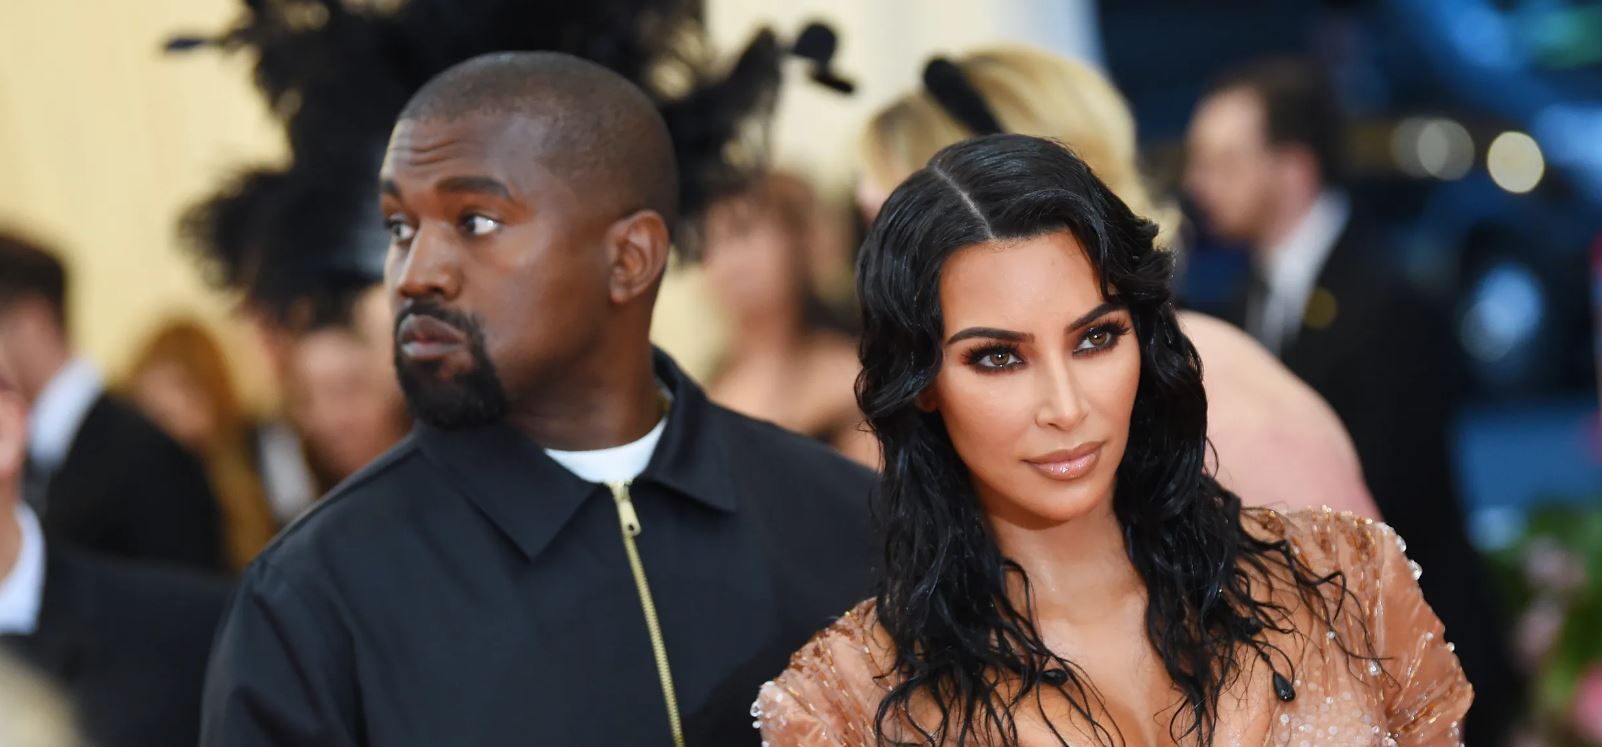 Kim Kardashian e Kanye West: ufficiale il divorzio milionario -RadioVenezia